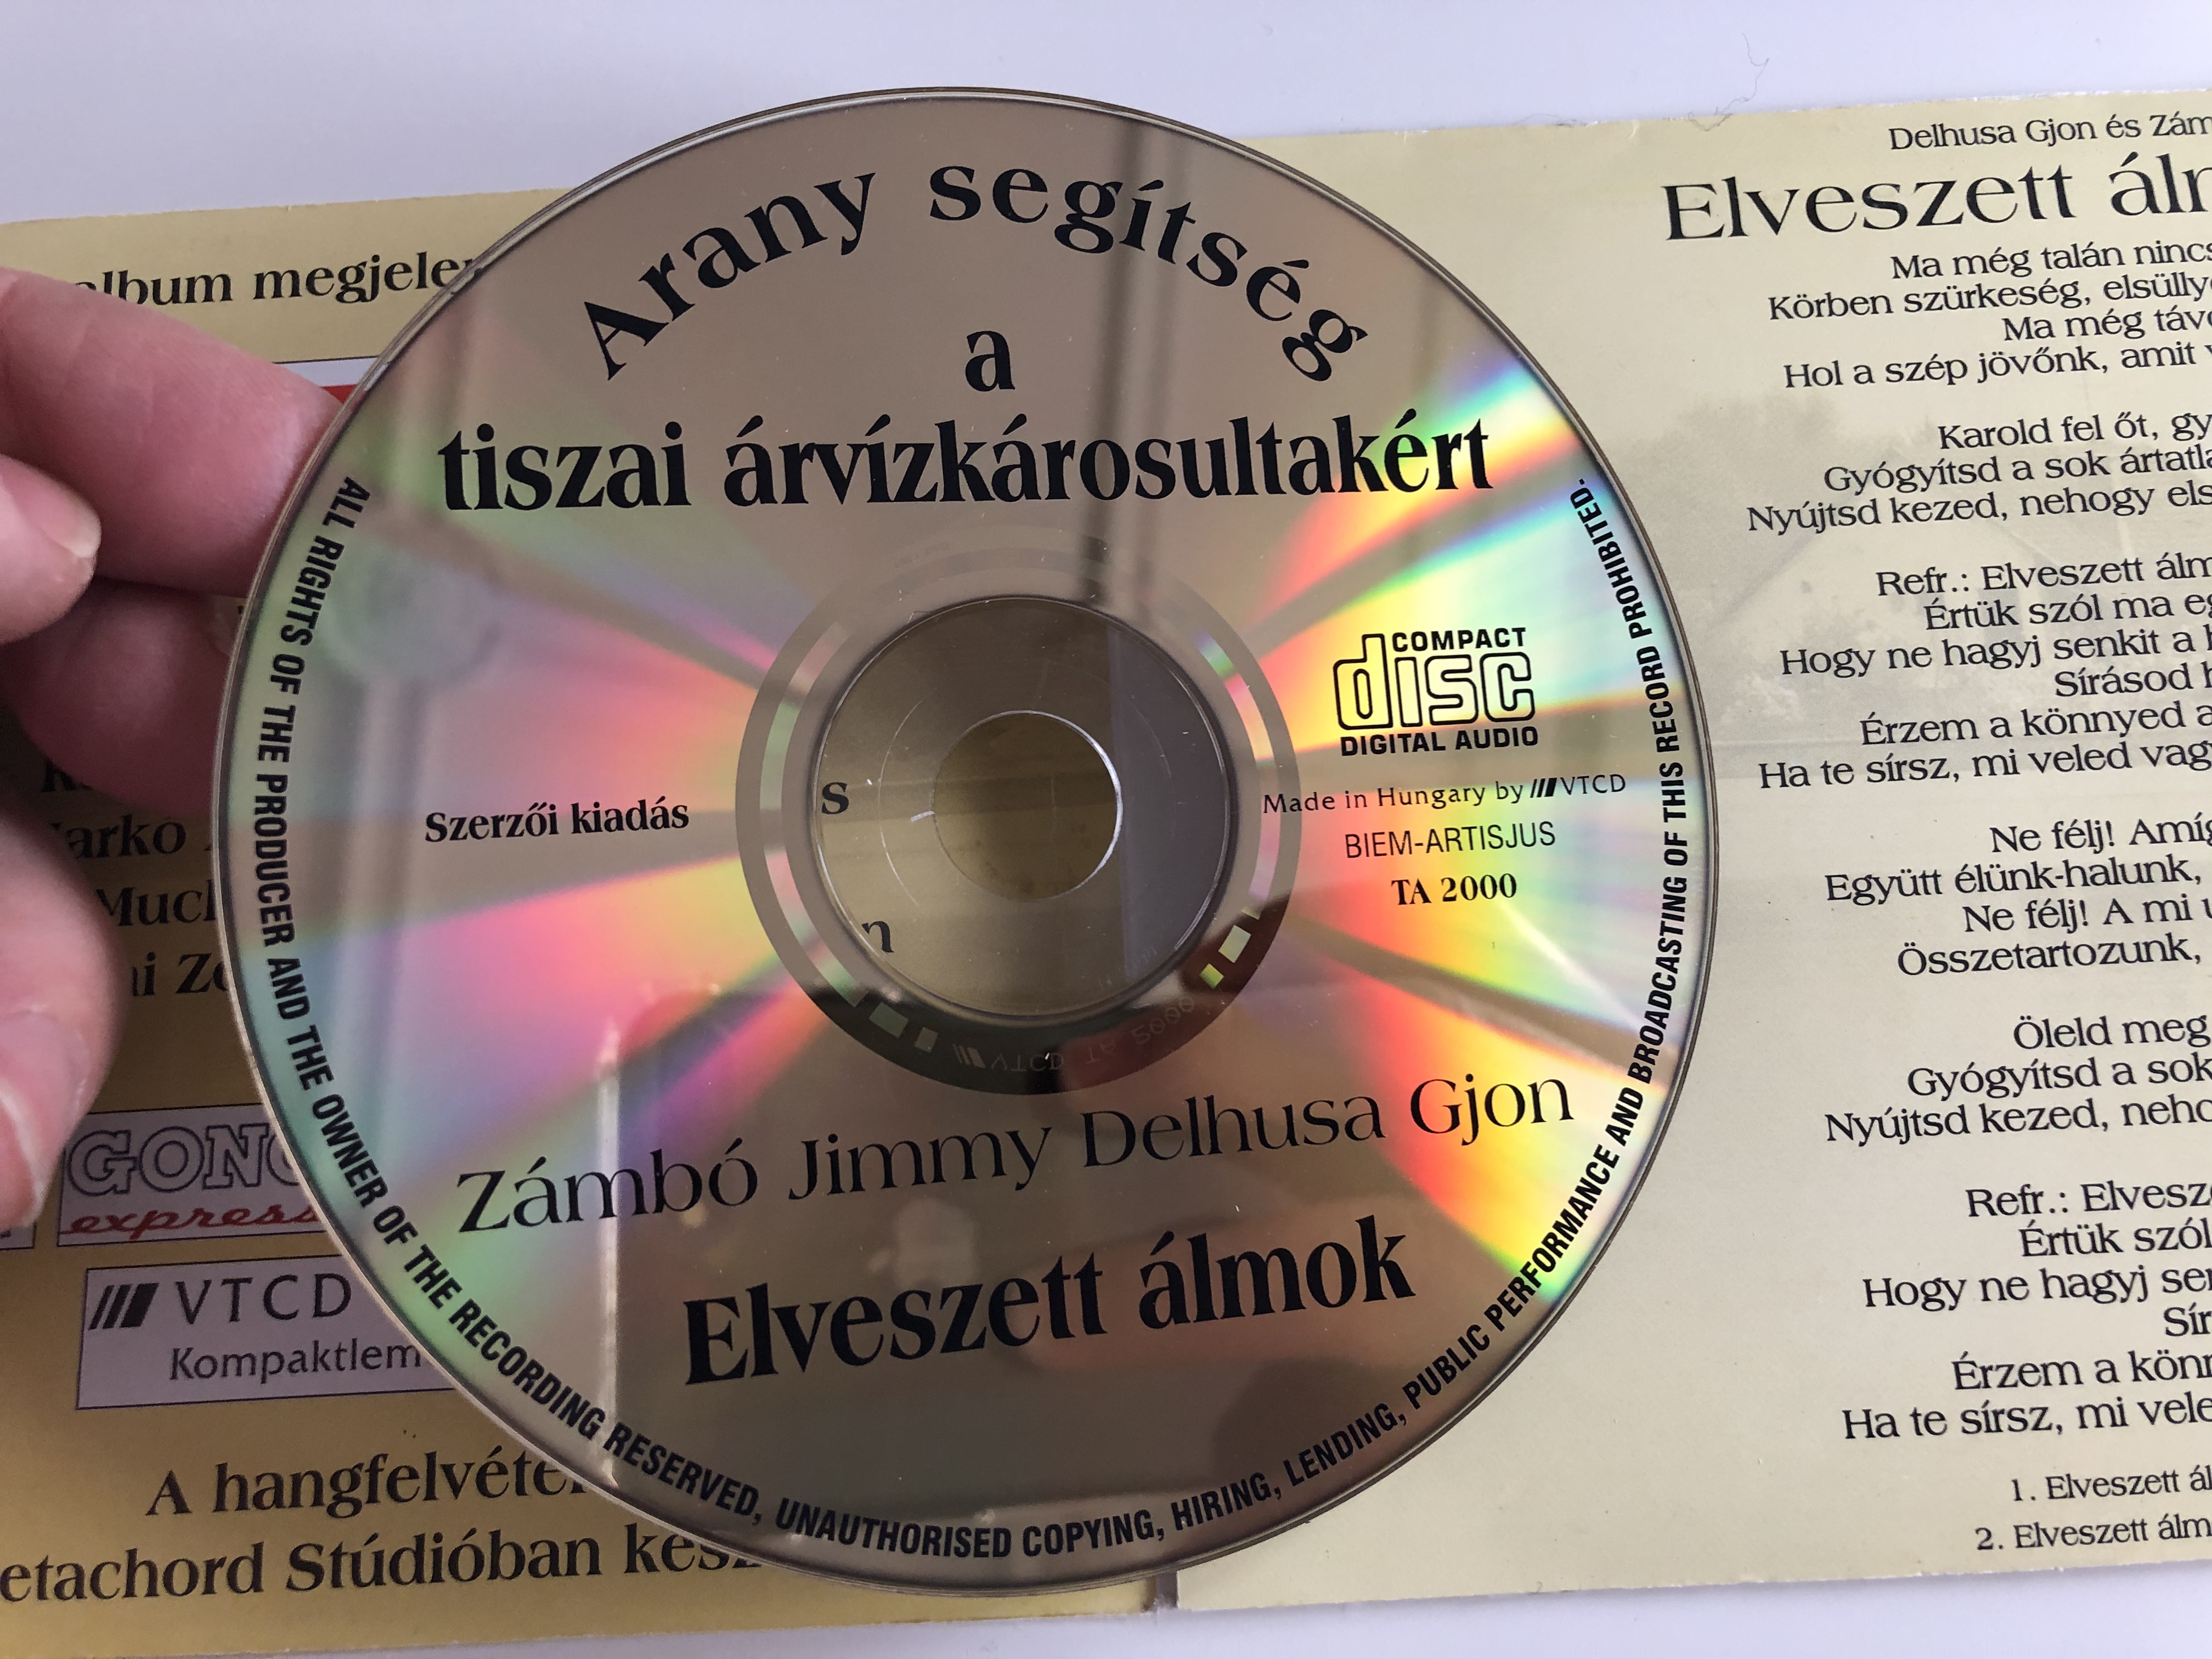 elveszett-lmok-z-mb-jimmy-delhusa-gjon-a-tiszai-rv-zk-rosultak-rt-gong-express-kft.-audio-cd-ta-2000-3-.jpg